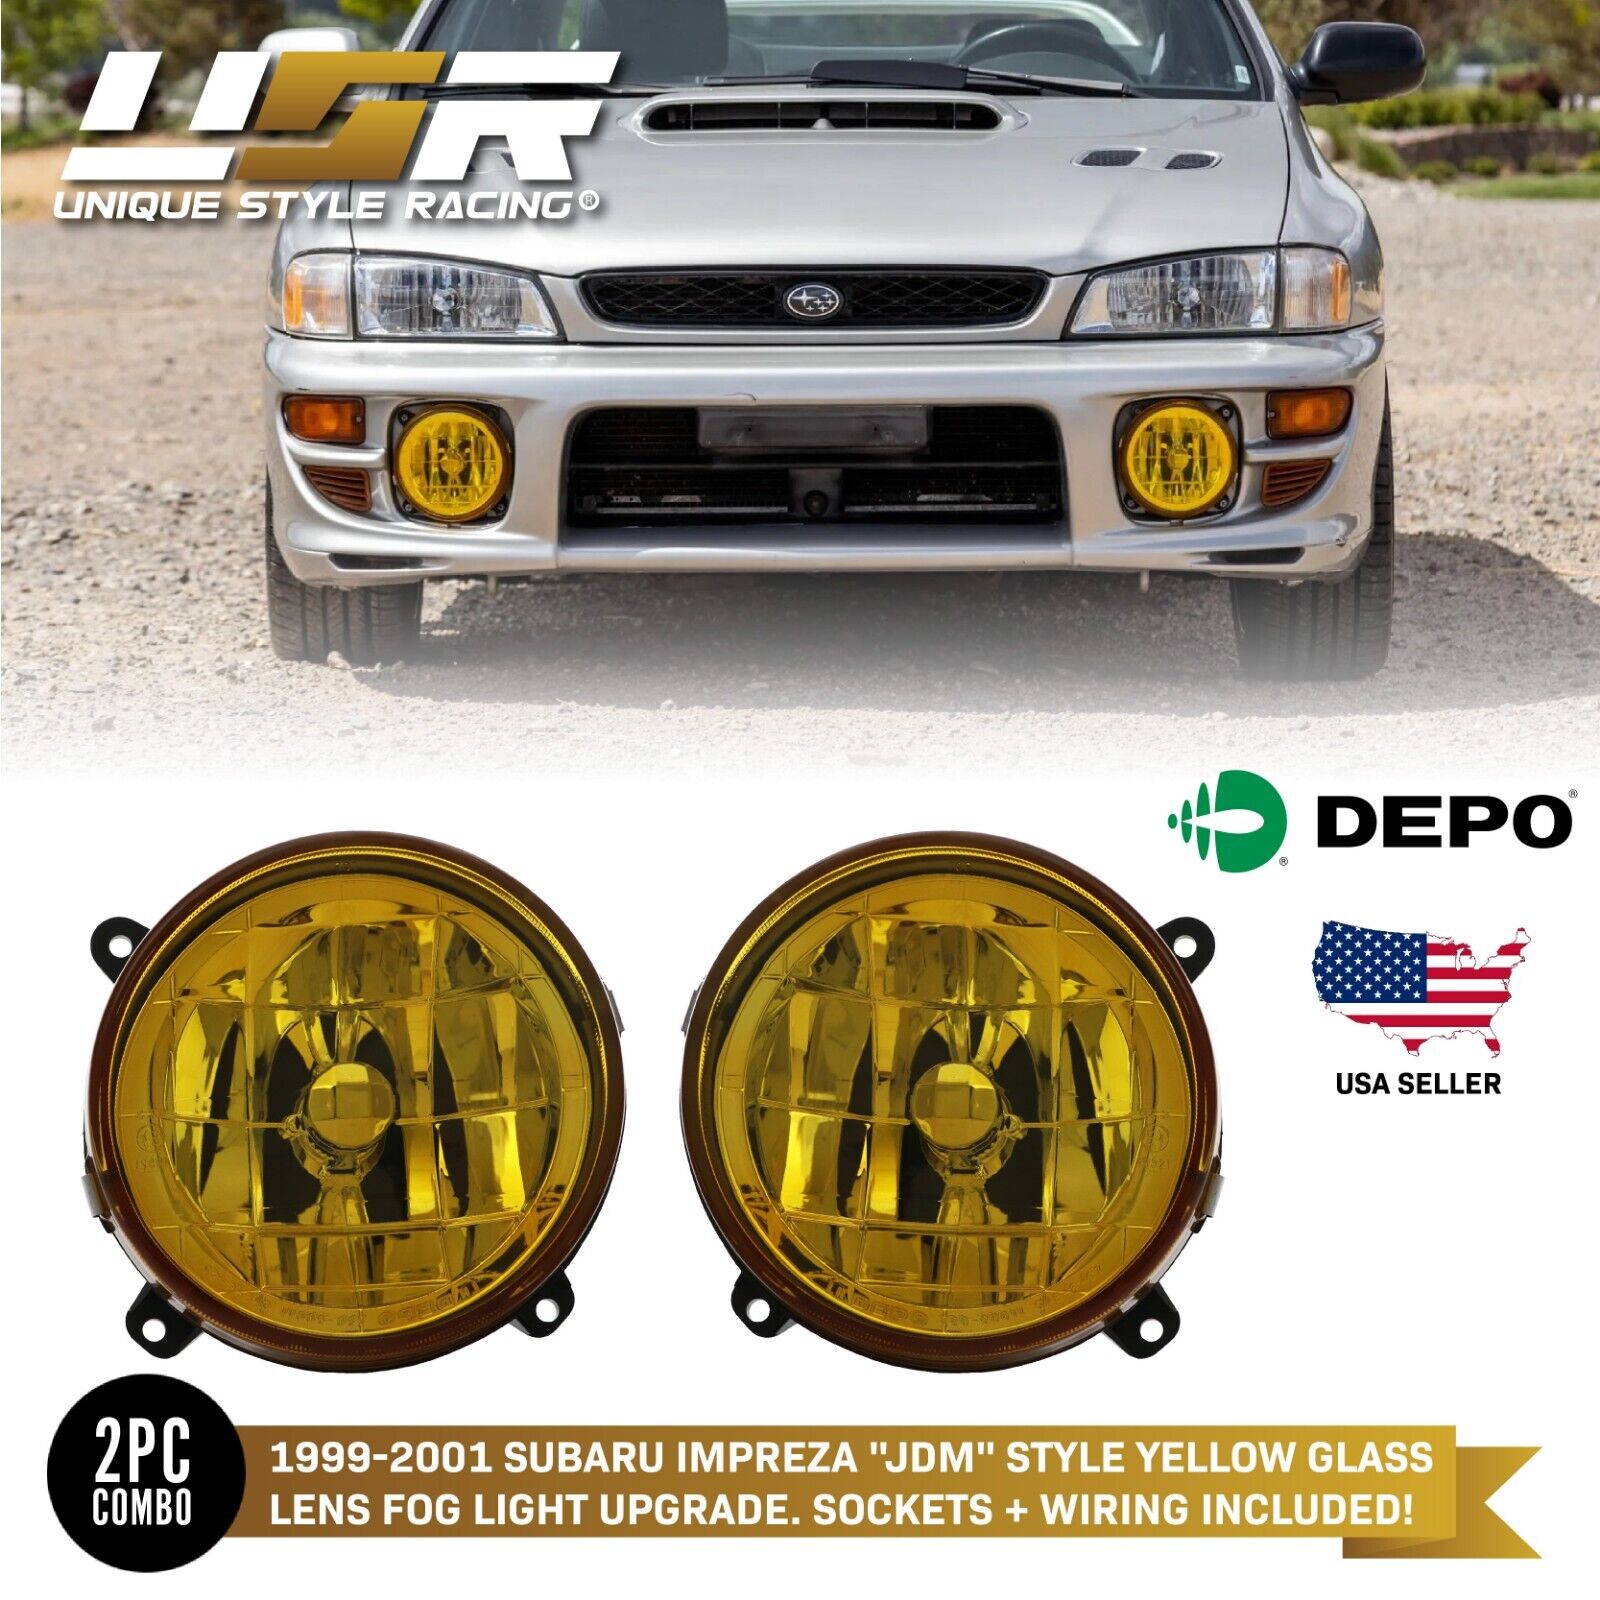 DEPO JDM Yellow Glass Fog Light Pair For 1999-2001 Subaru Impreza 2.5 RS / WRX